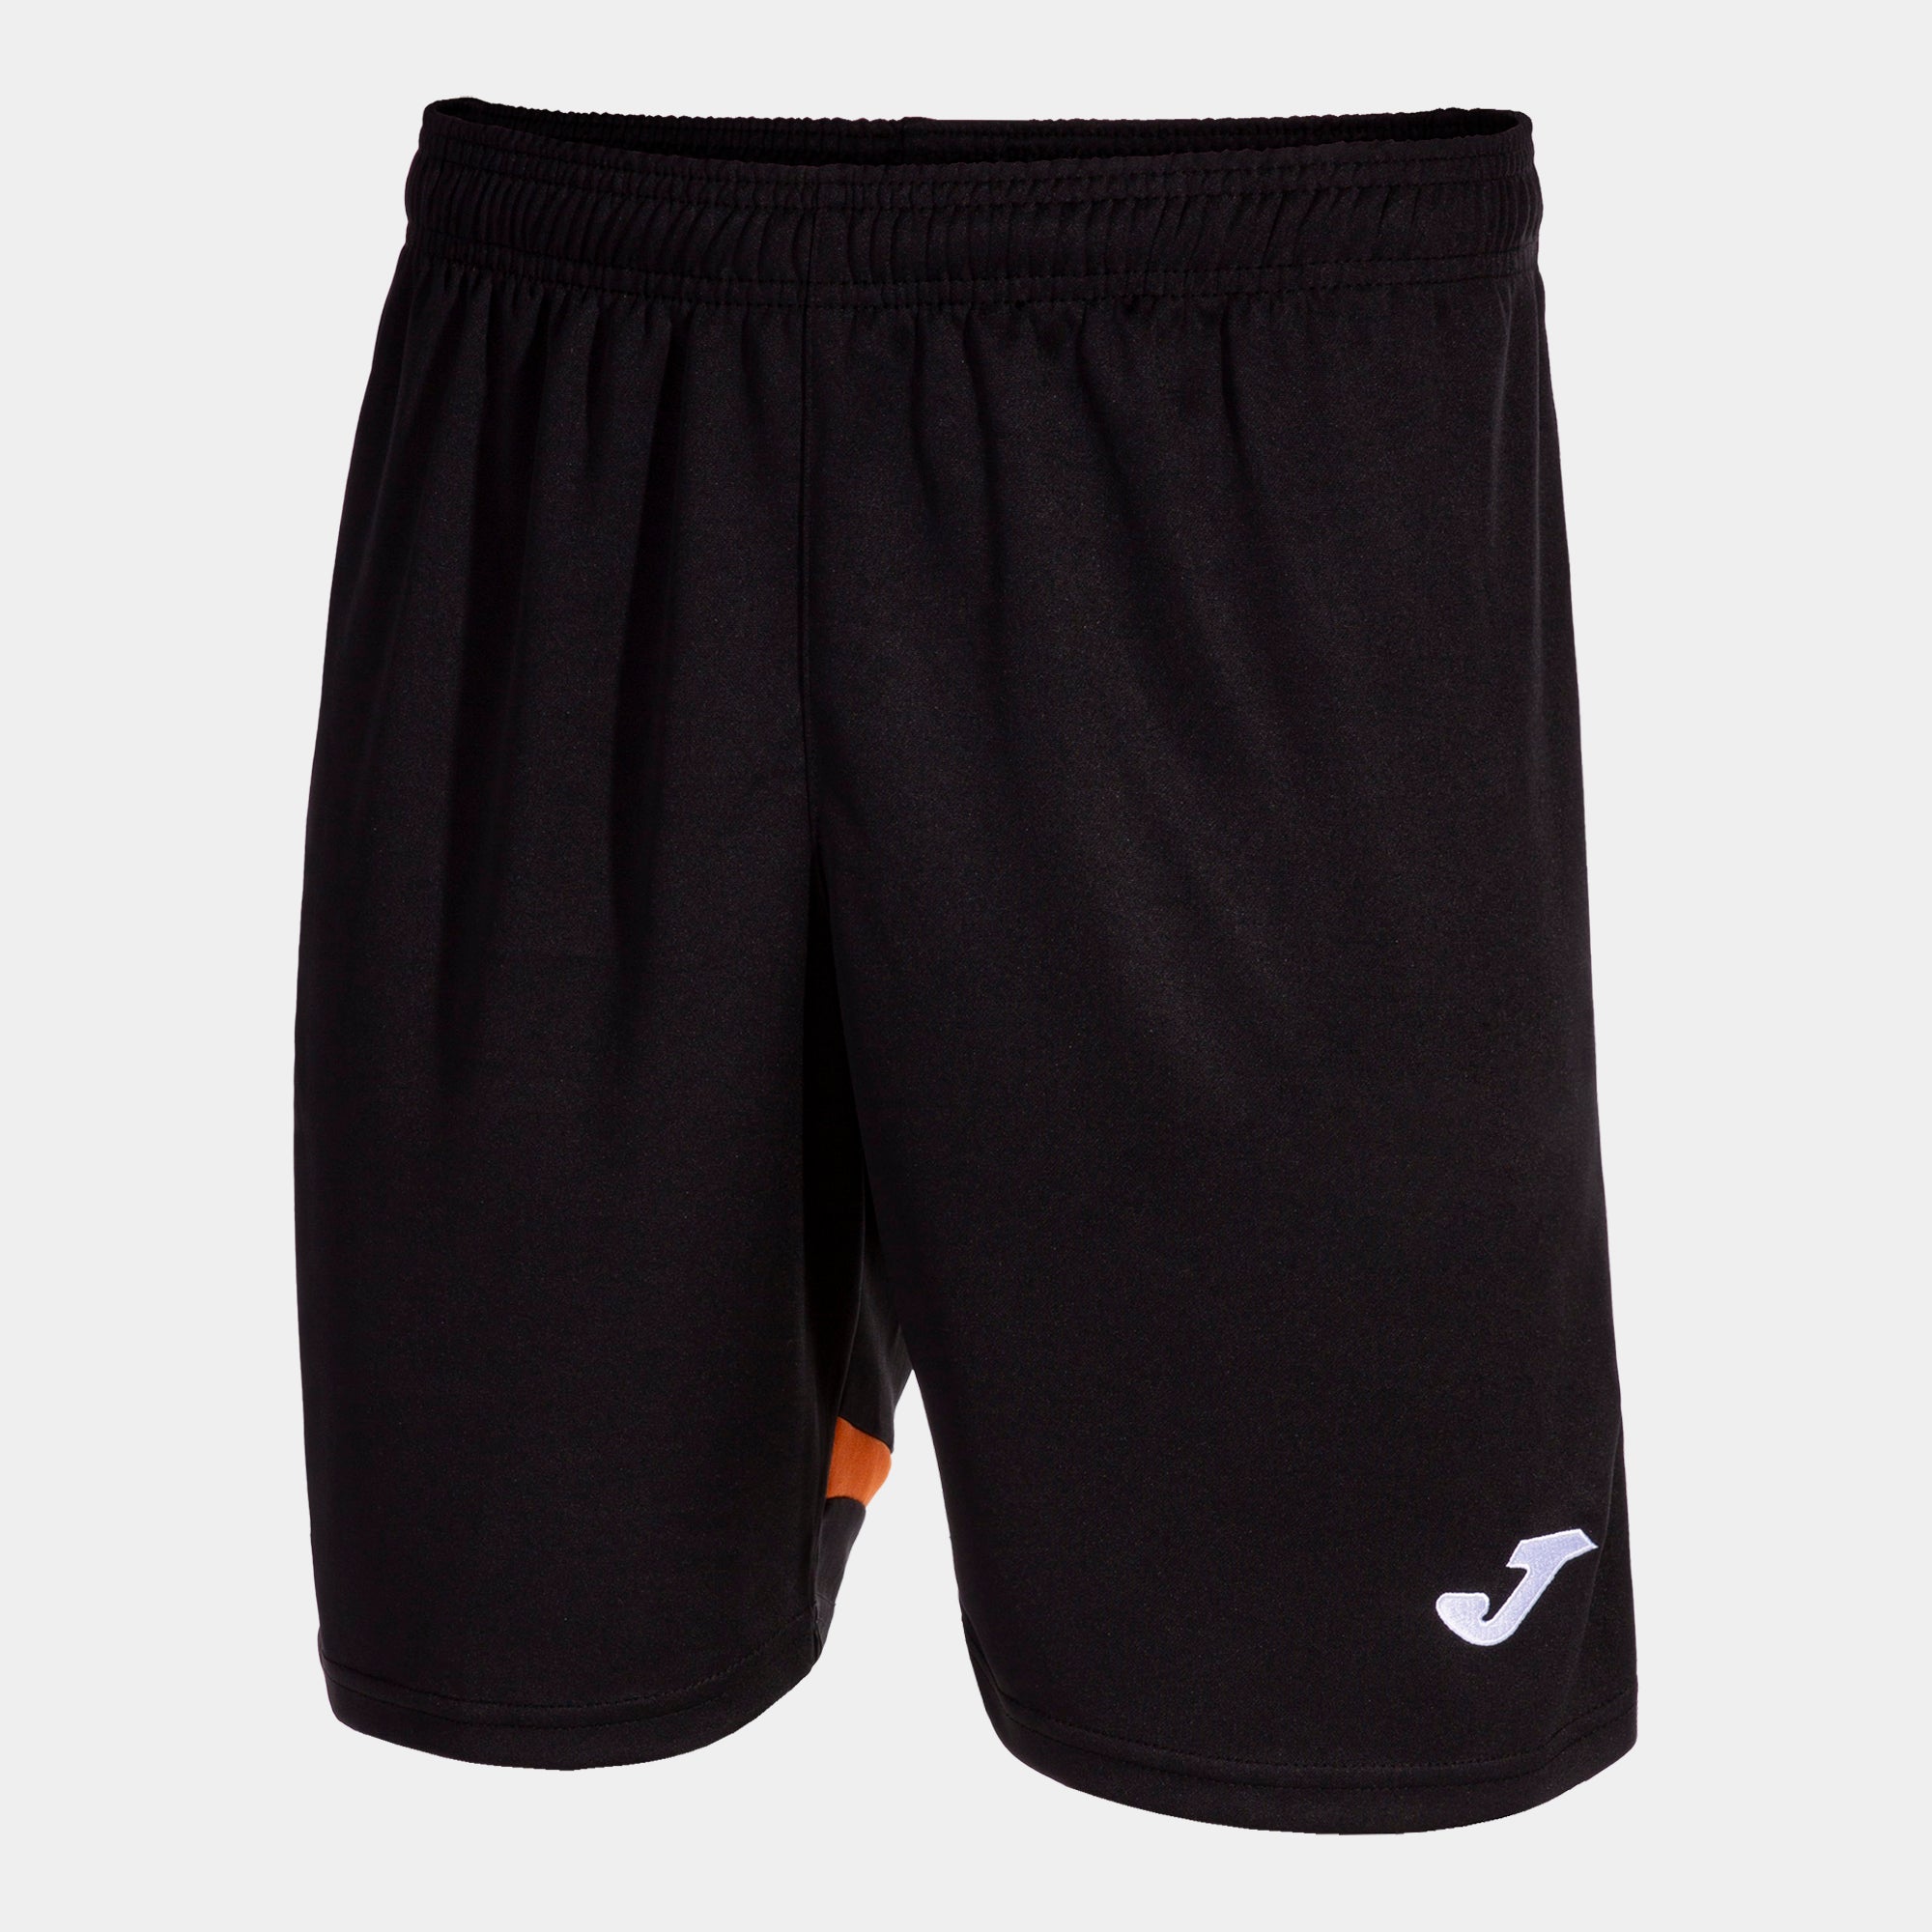 Joma Tokio Shorts - Black/Orange